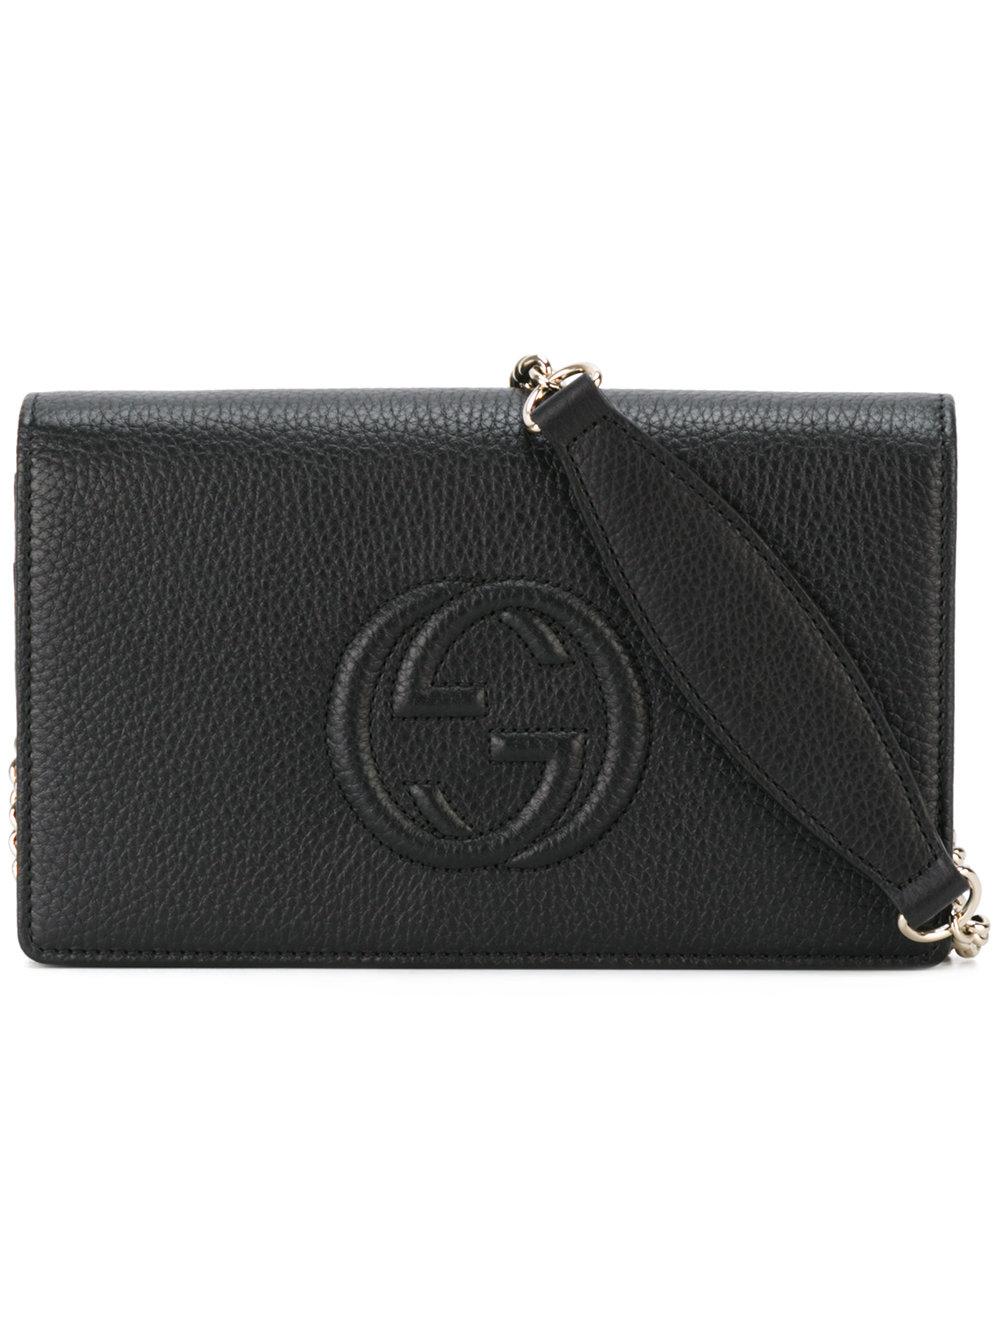 Gucci Soho Wallet Chain in Black | Lyst